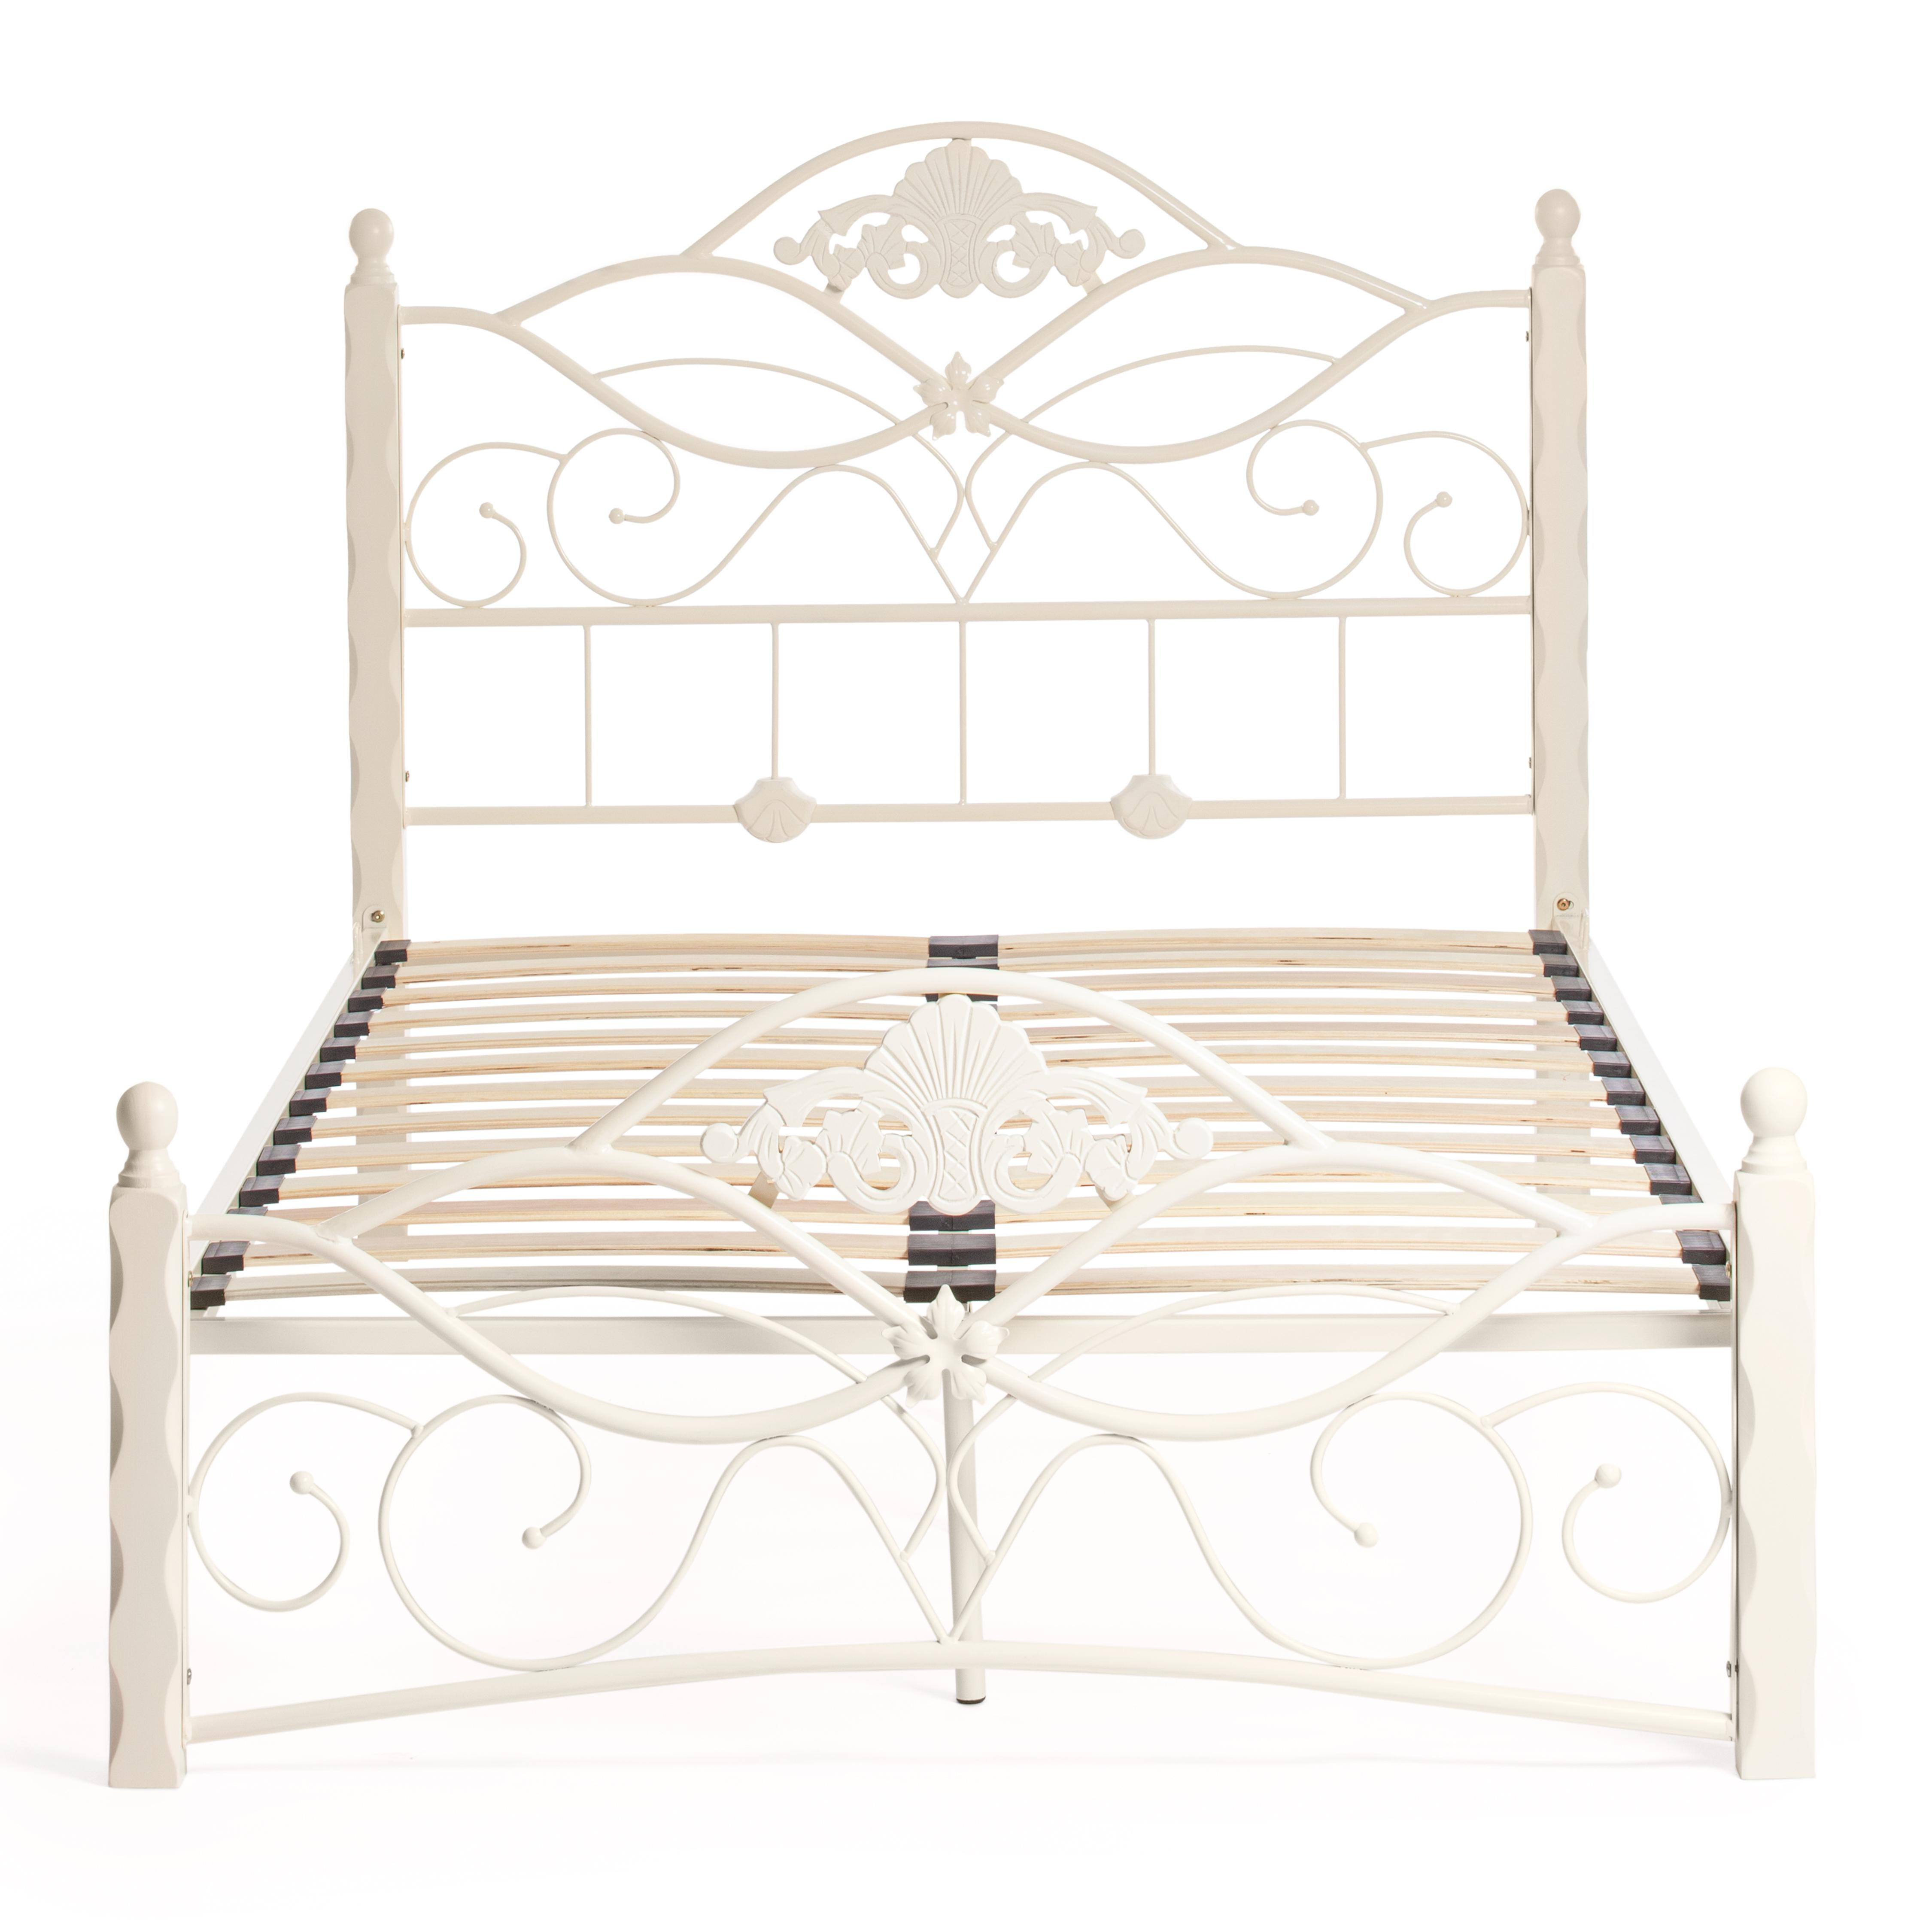 Кровать CANZONA Wood slat base дерево гевея/металл, 140*200 см (Double bed), Белый (butter white)